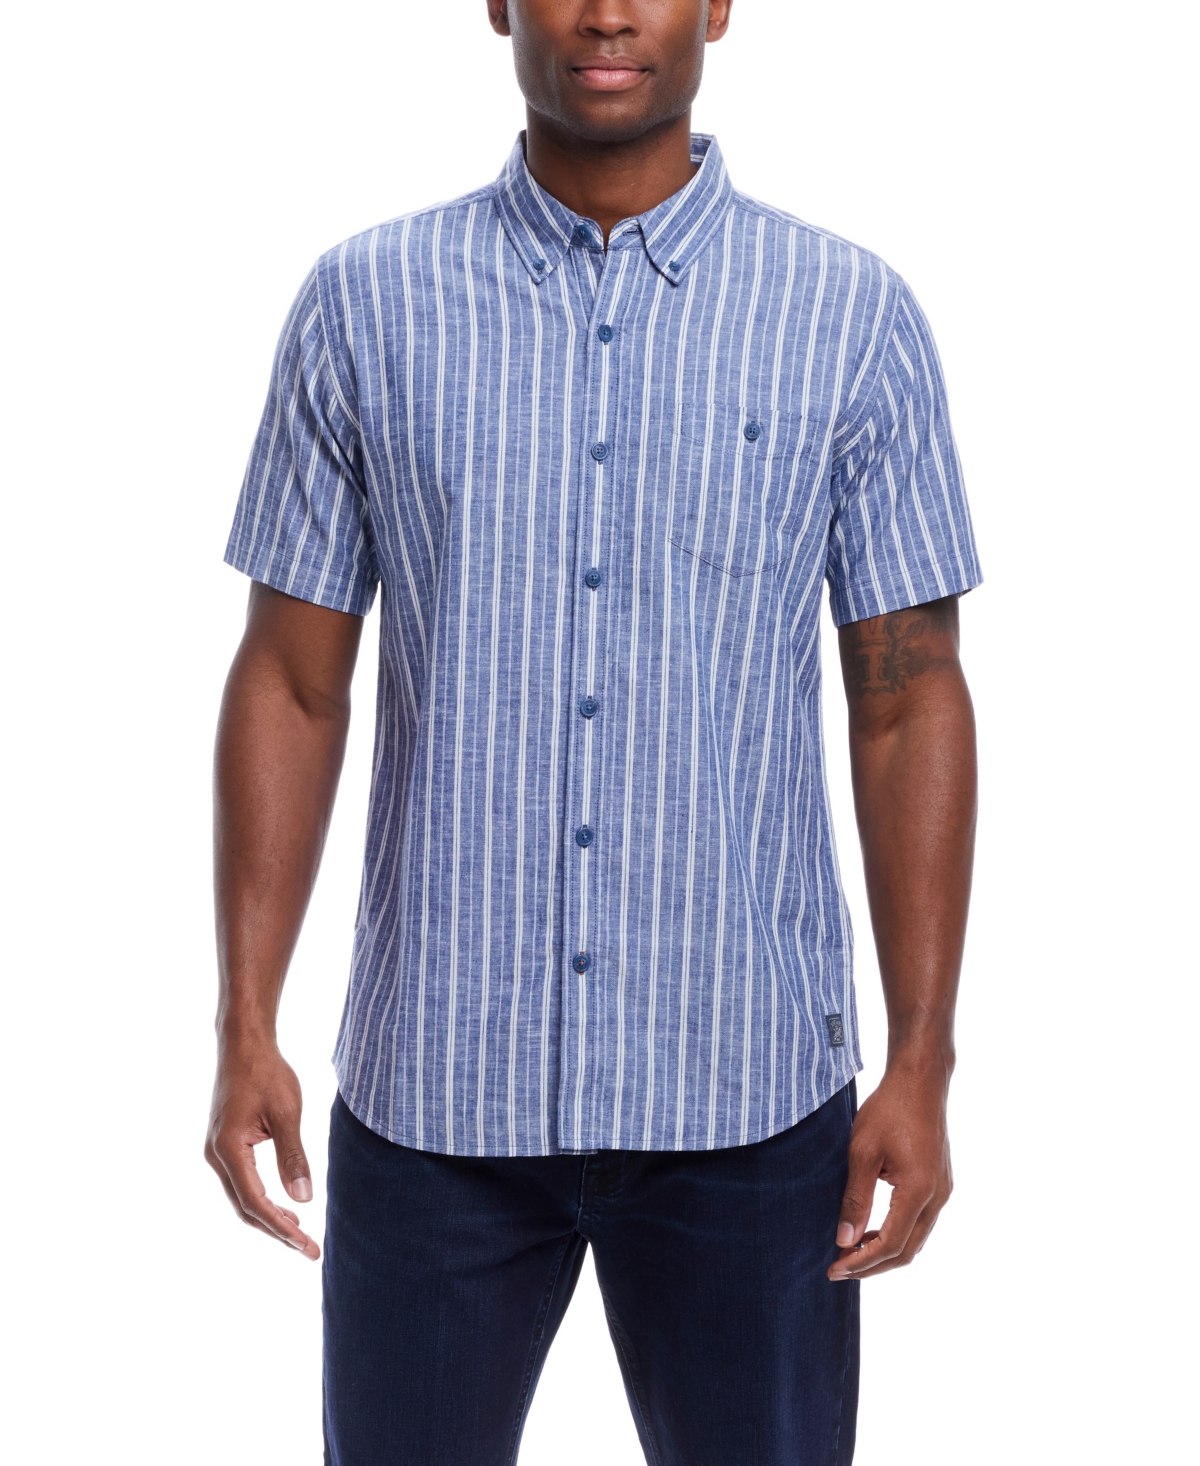 Men's Short Sleeve Striped Cotton Button Down Shirt - Monaco Blue